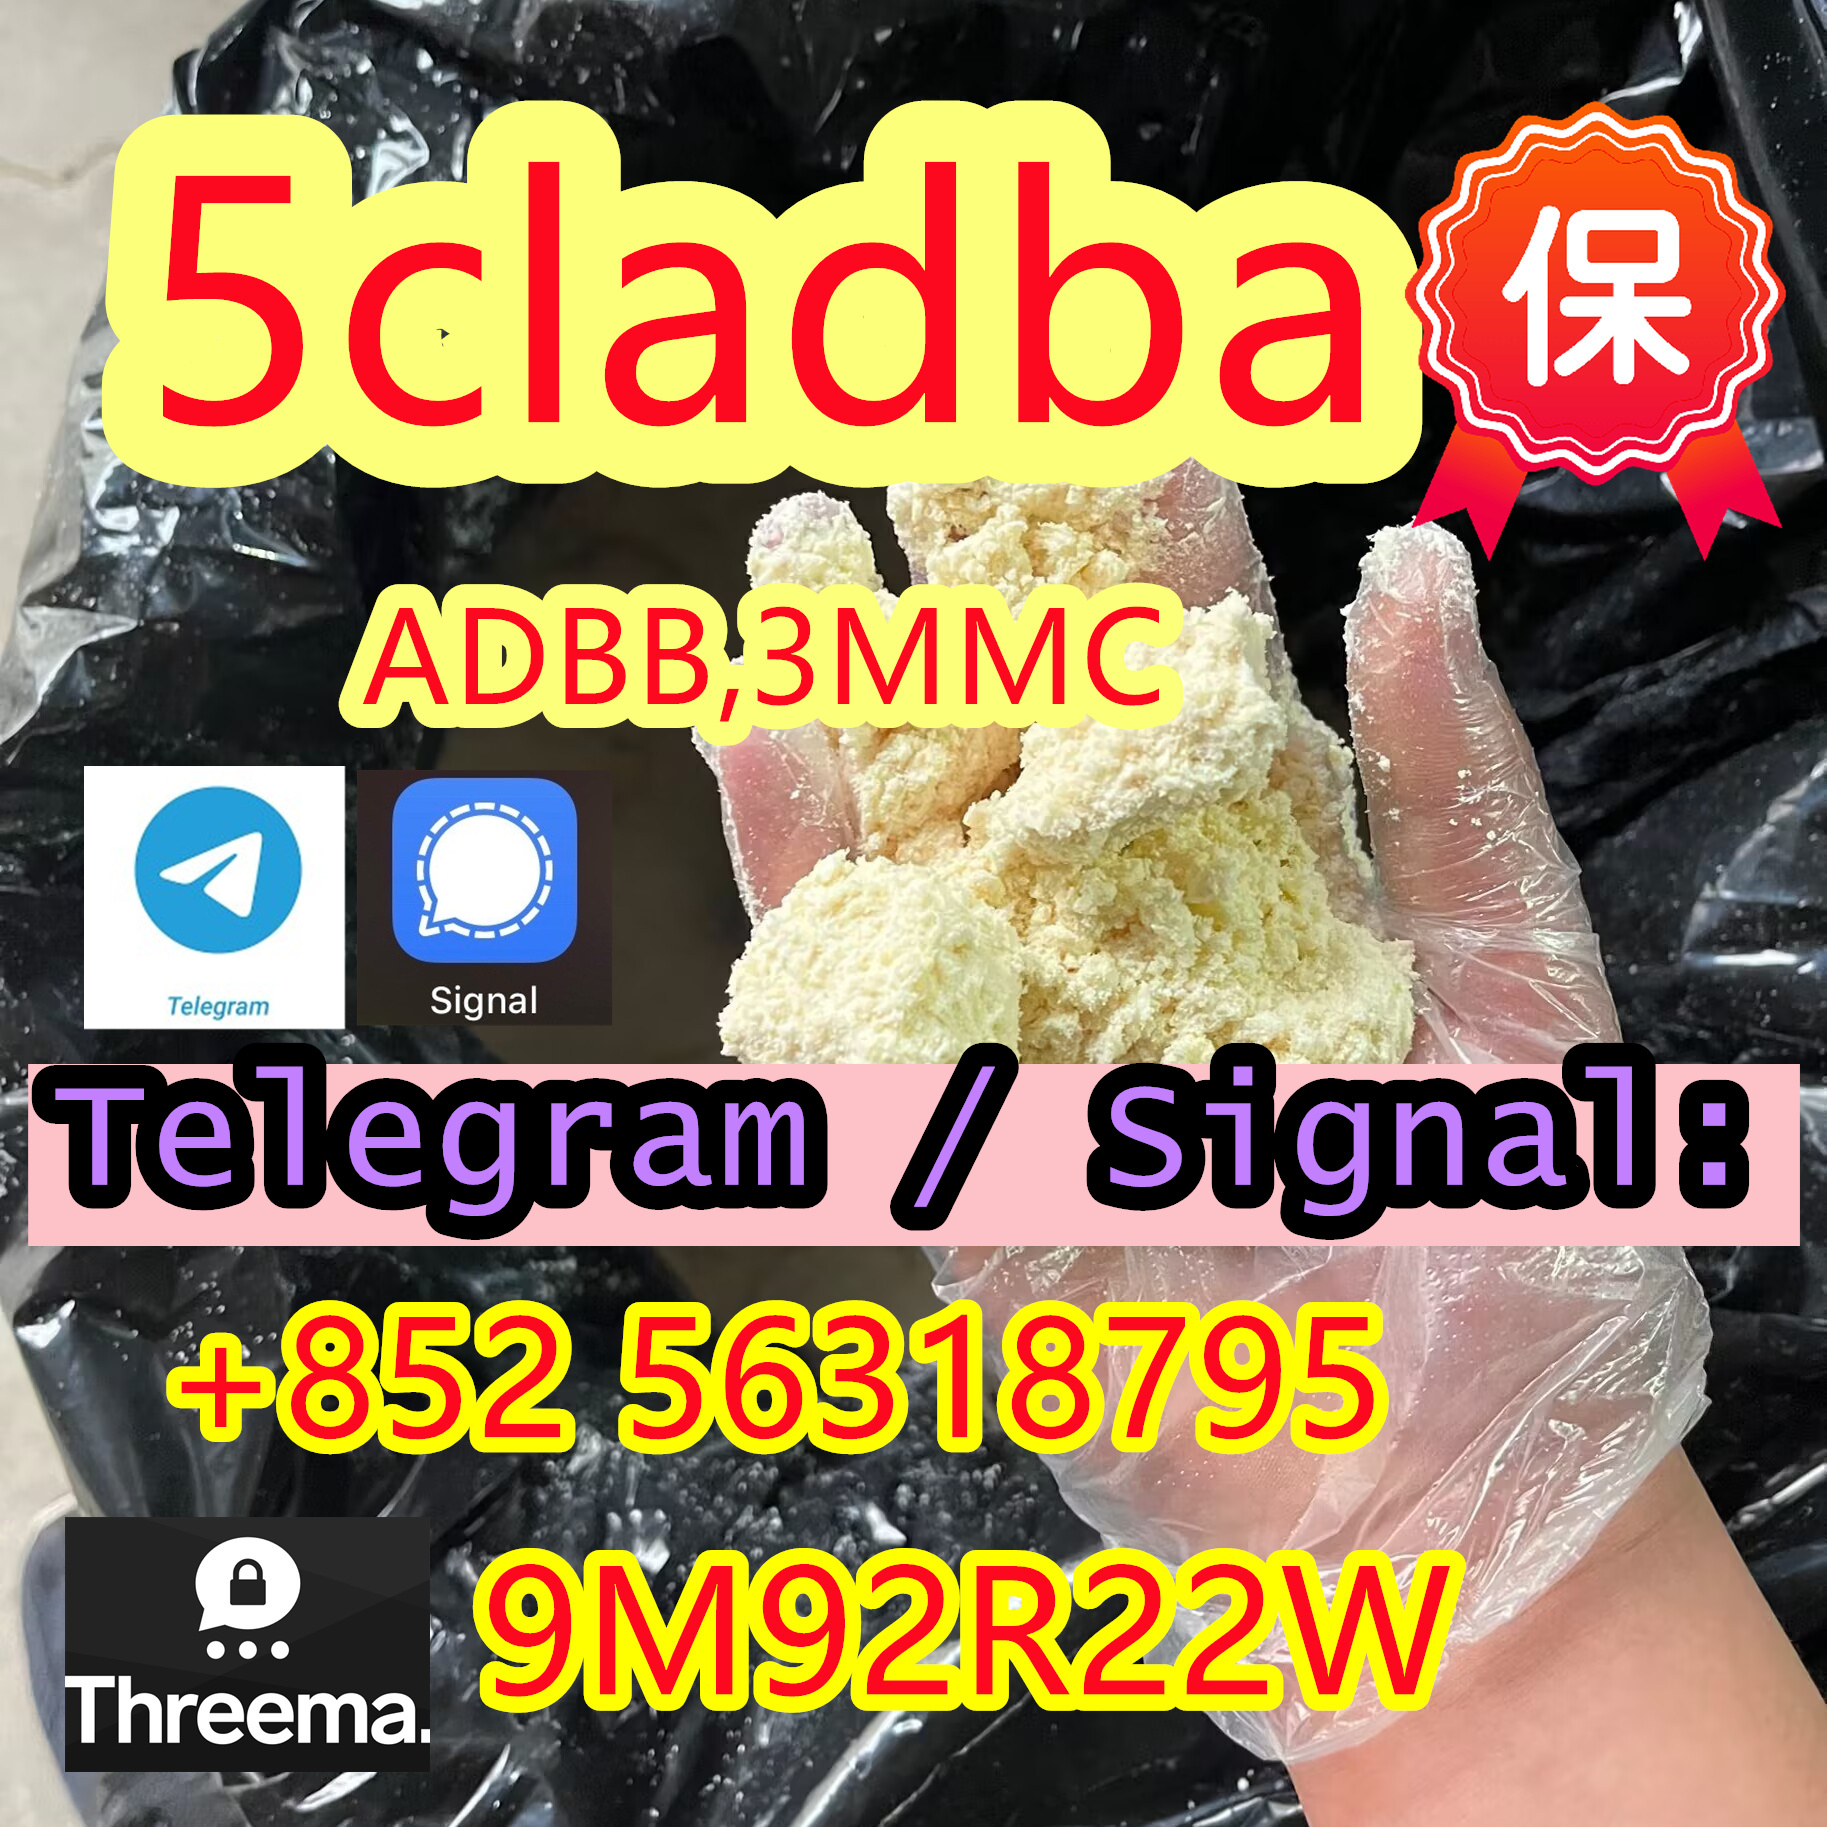 Telegram/Signal +852 56318795 Threema: 9M92R22W C